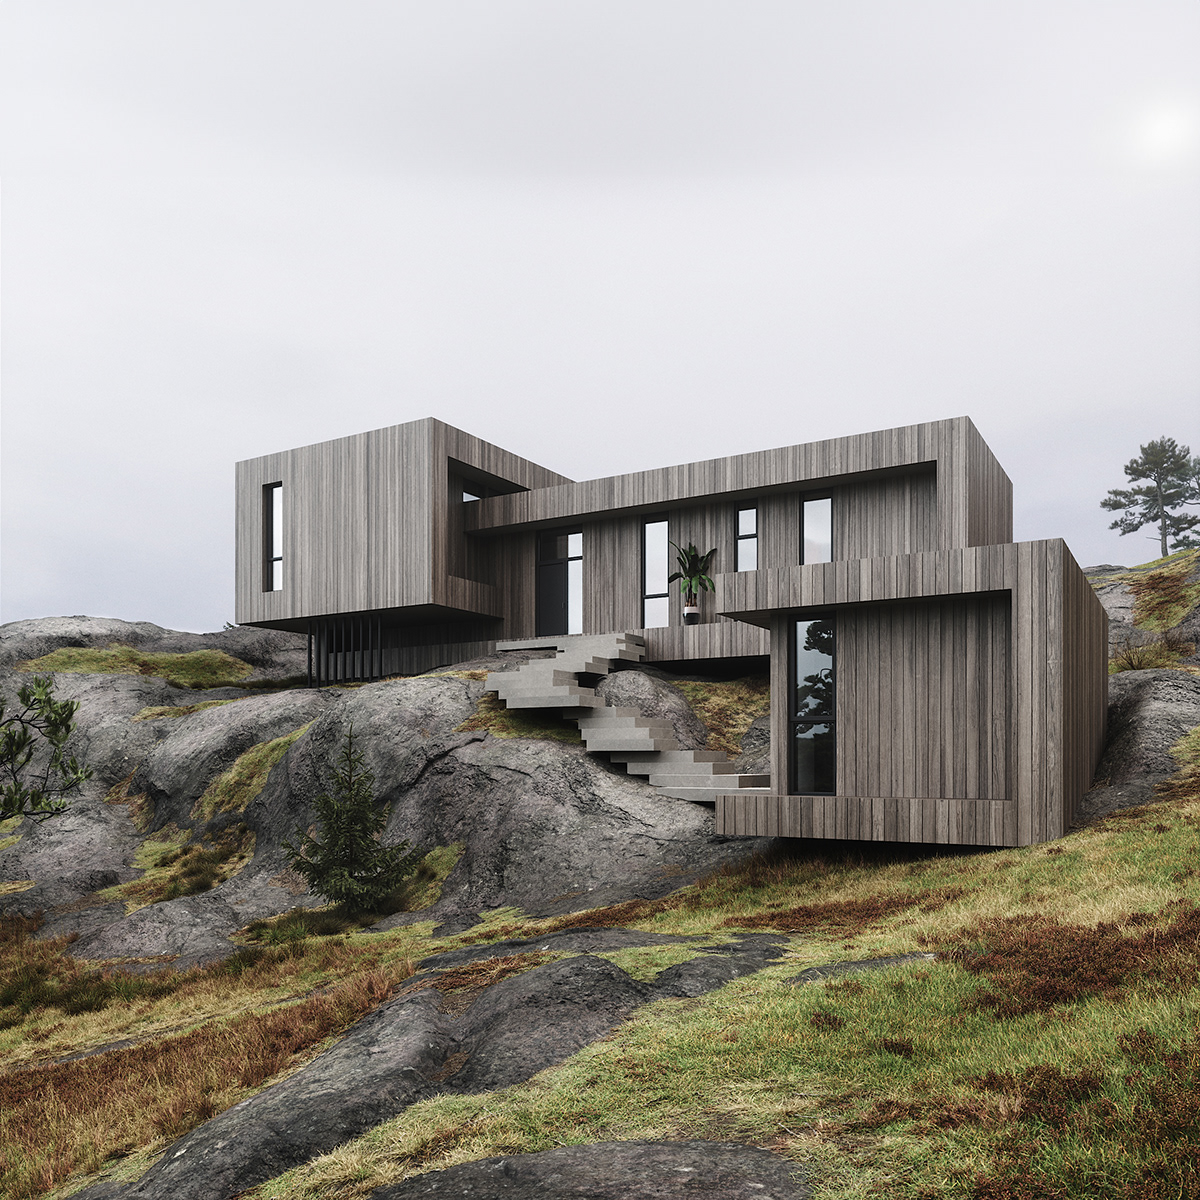 architecture archviz CGI exterior Landscape Nature norway cabin house fjord